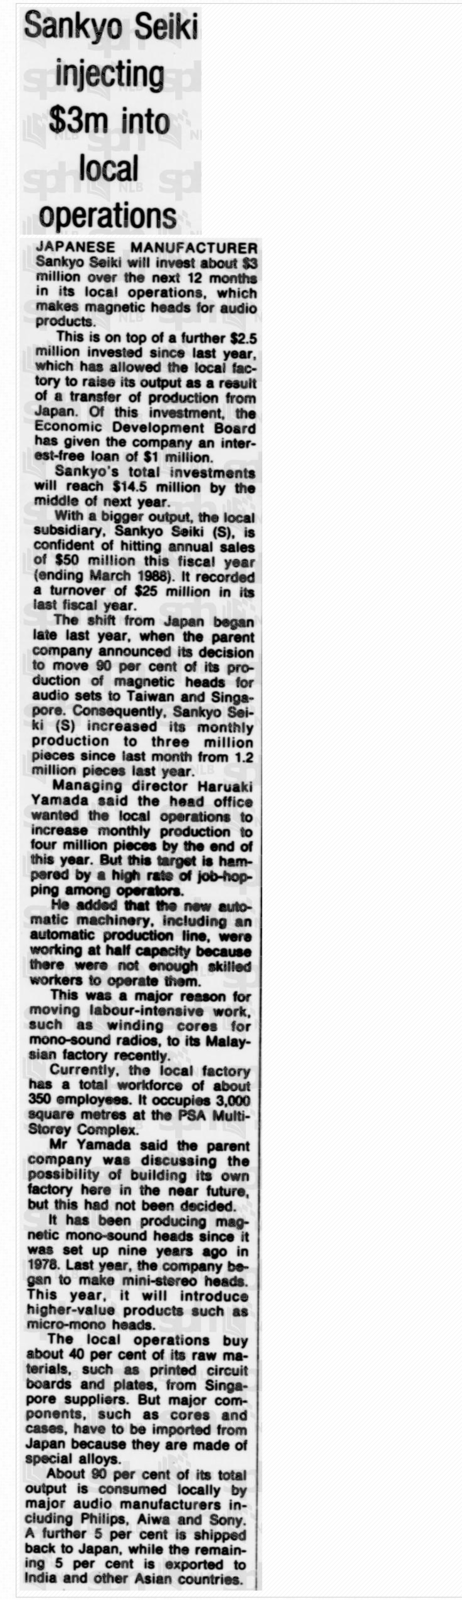 Sankyo Seiki injecting $3m into local operations BizTimes 1987.png